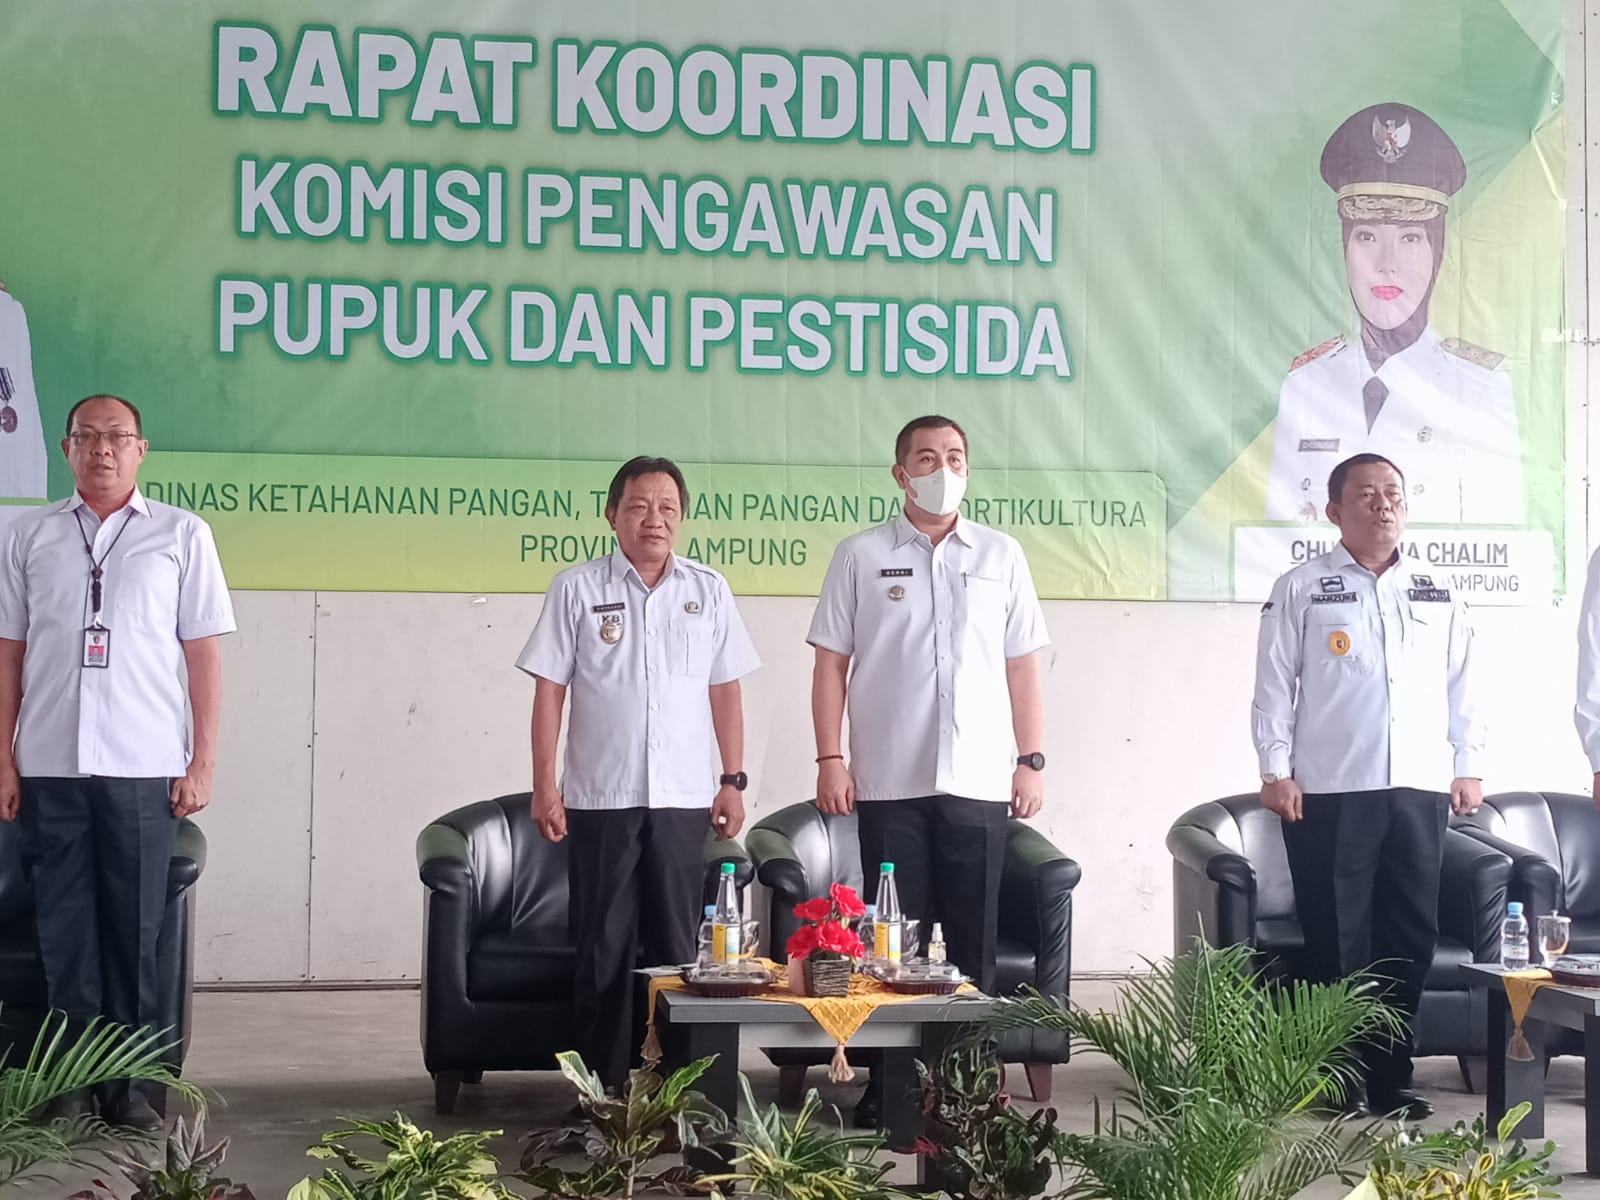 Pesan Gubernur Lampung Arinal Kepada KP3: Pengadaan dan Penyaluran Pupuk Wajib Diawasi!